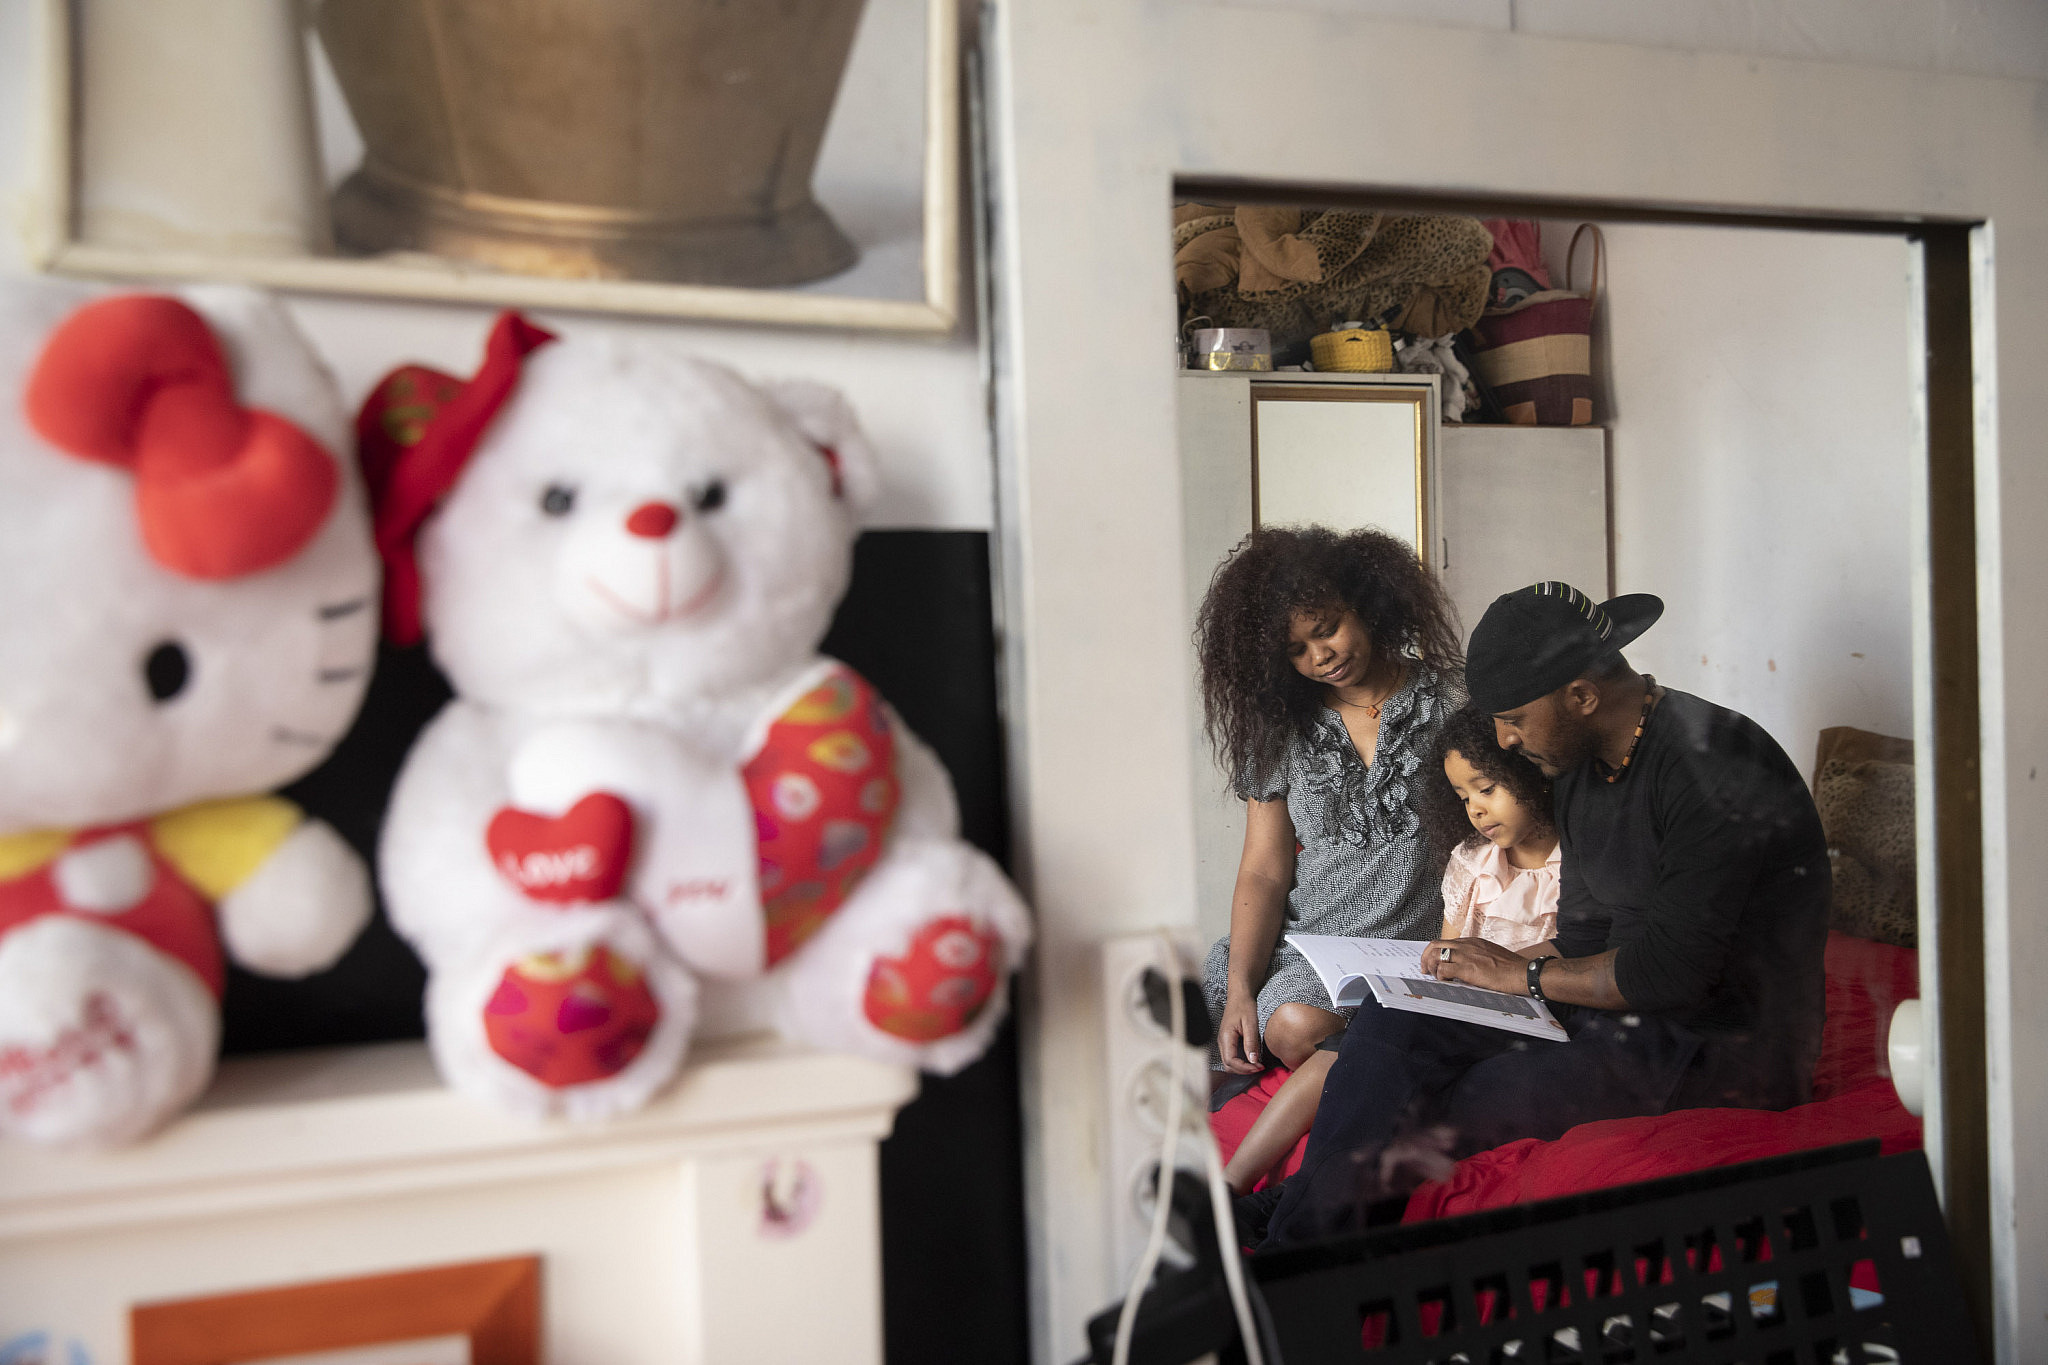 Portrait of a crisis: Asylum seekers in south Tel Aviv under coronavirus